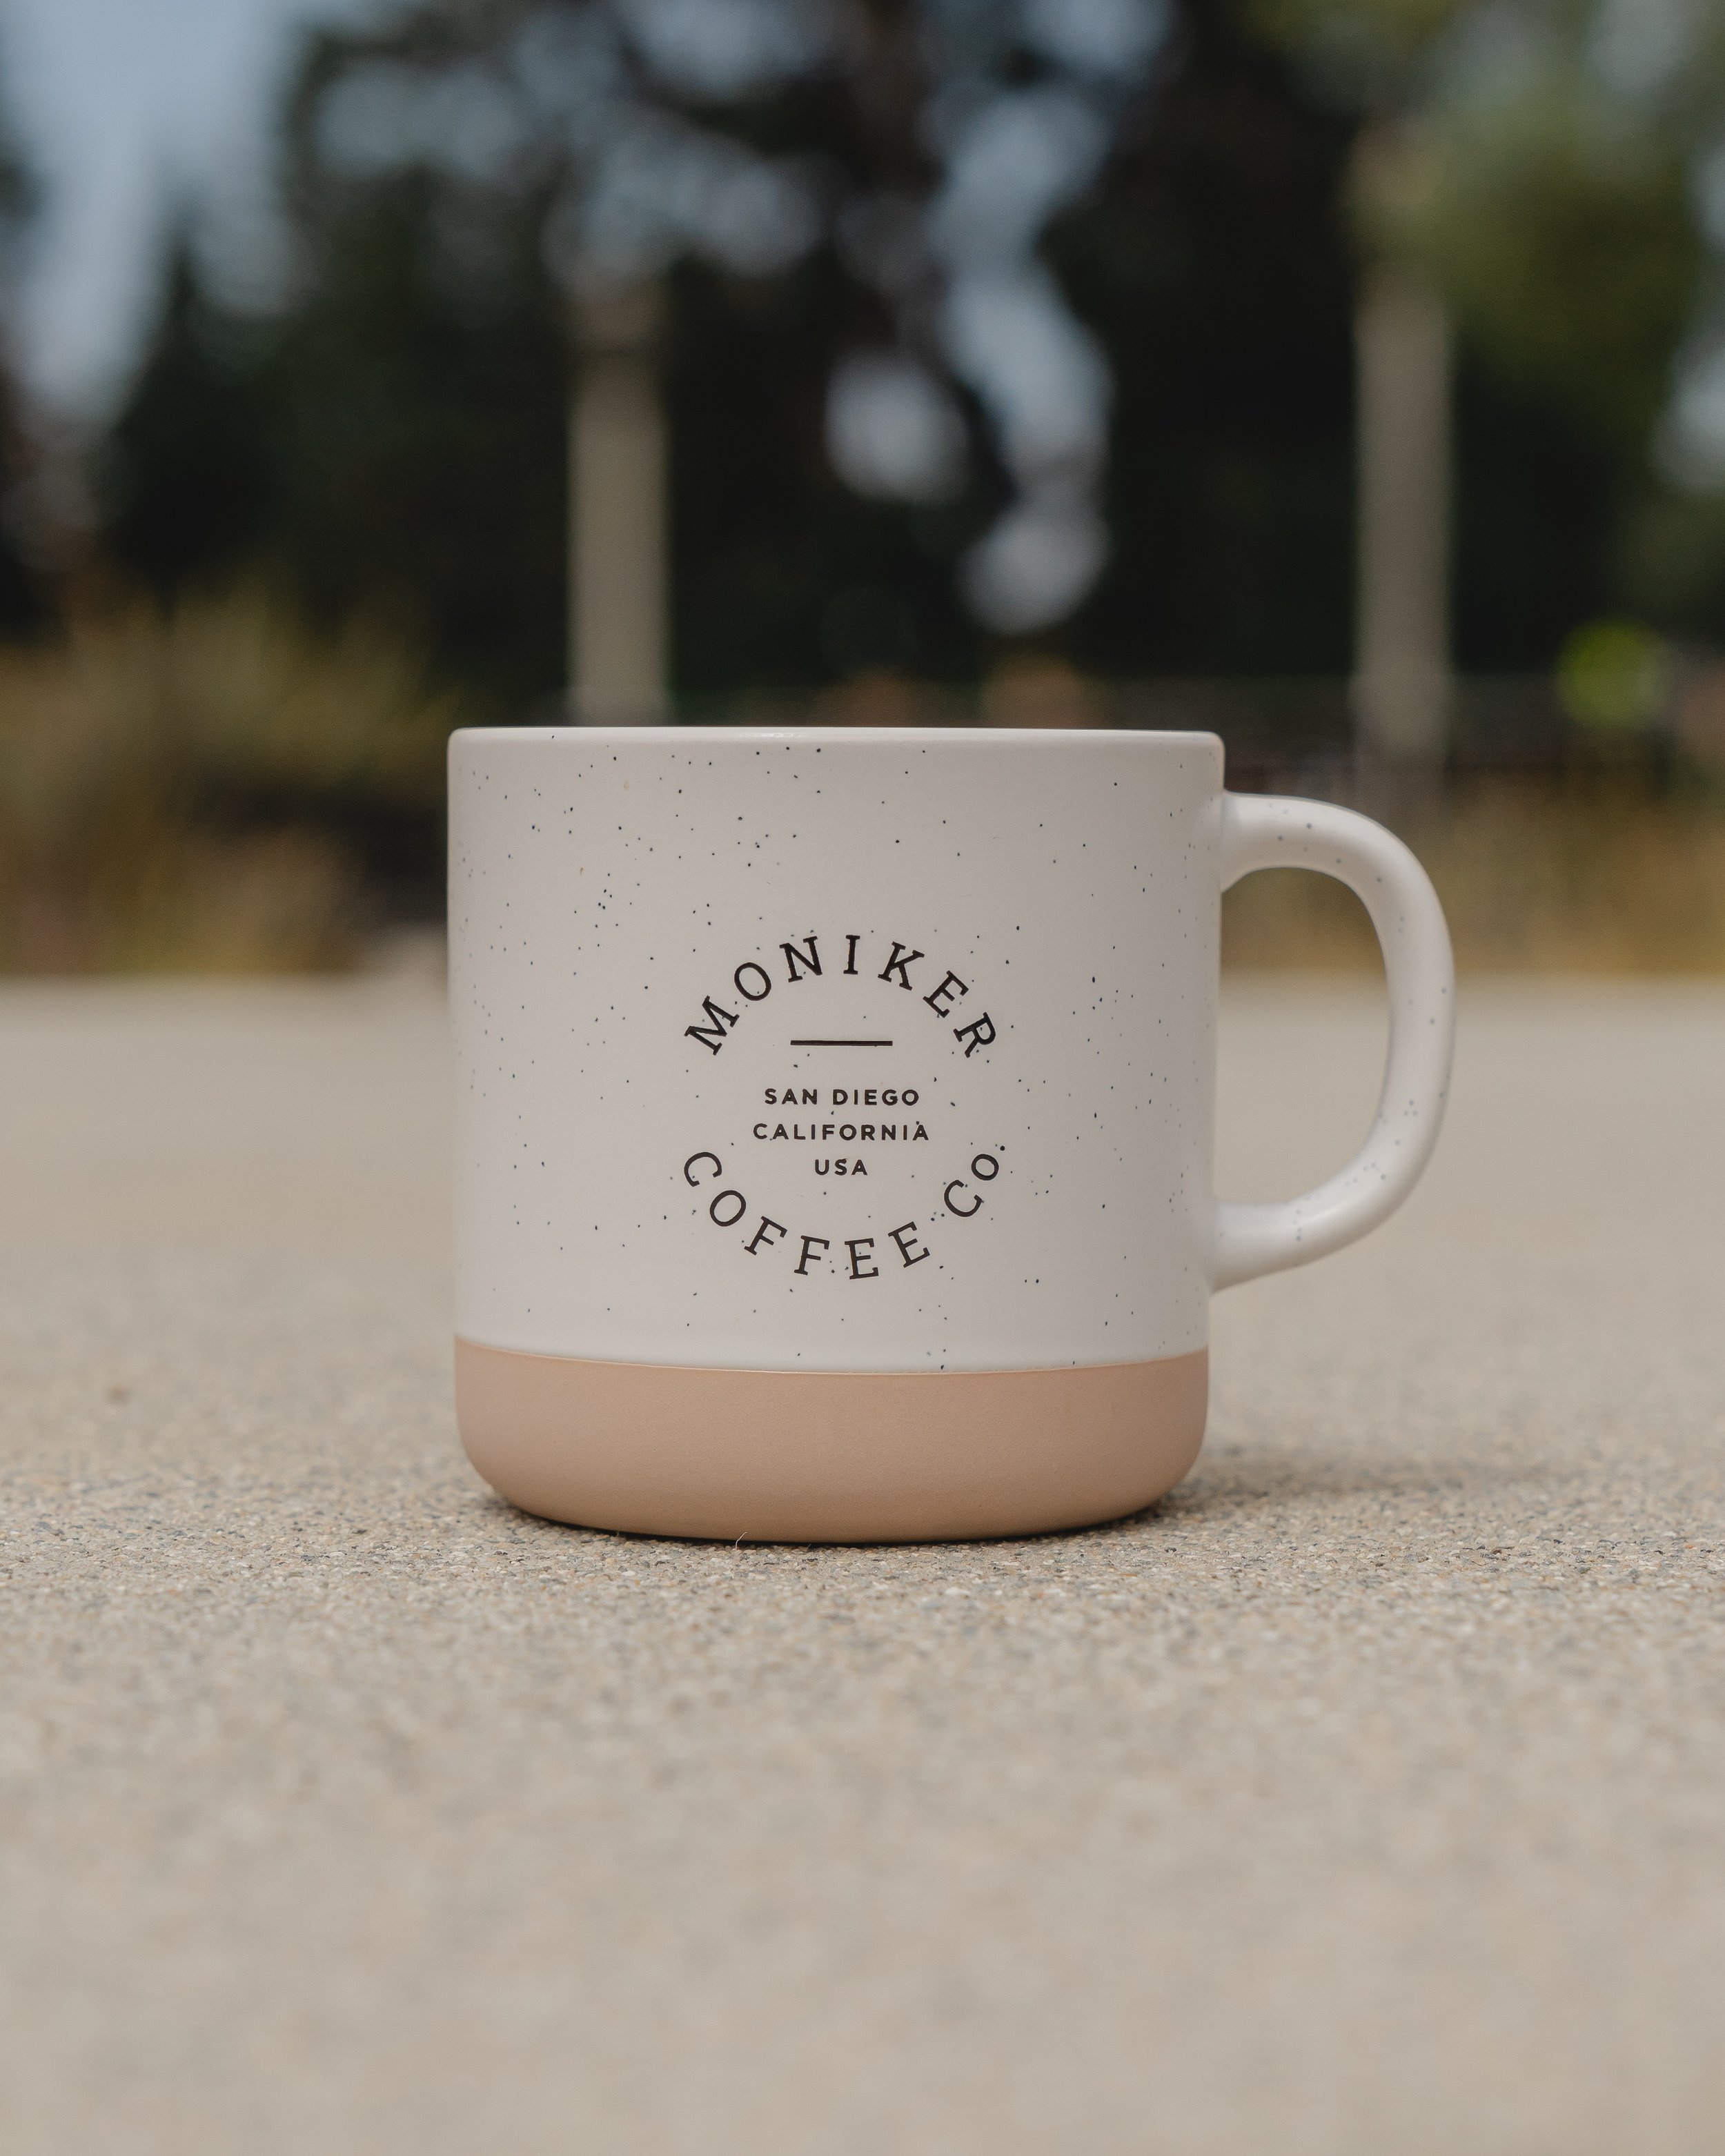 Moniker Coffee Co New Merch-3.jpg